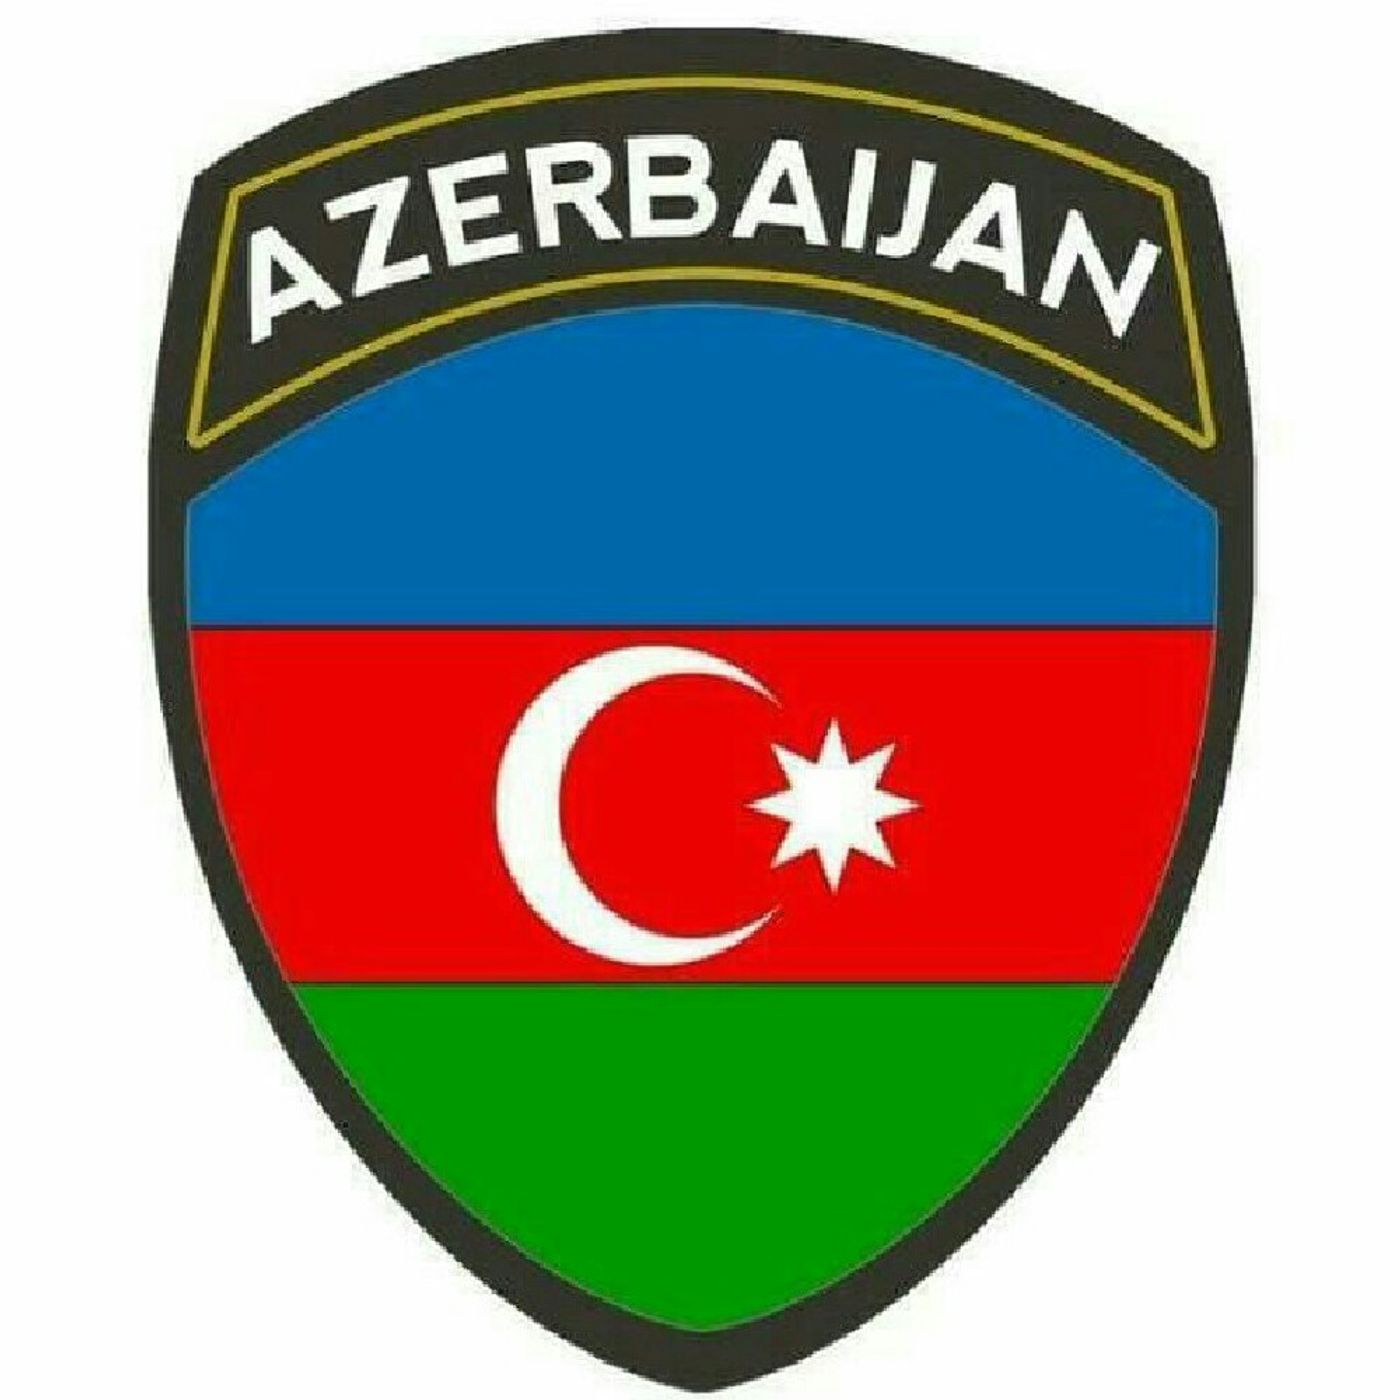 Radio Azerbaijan